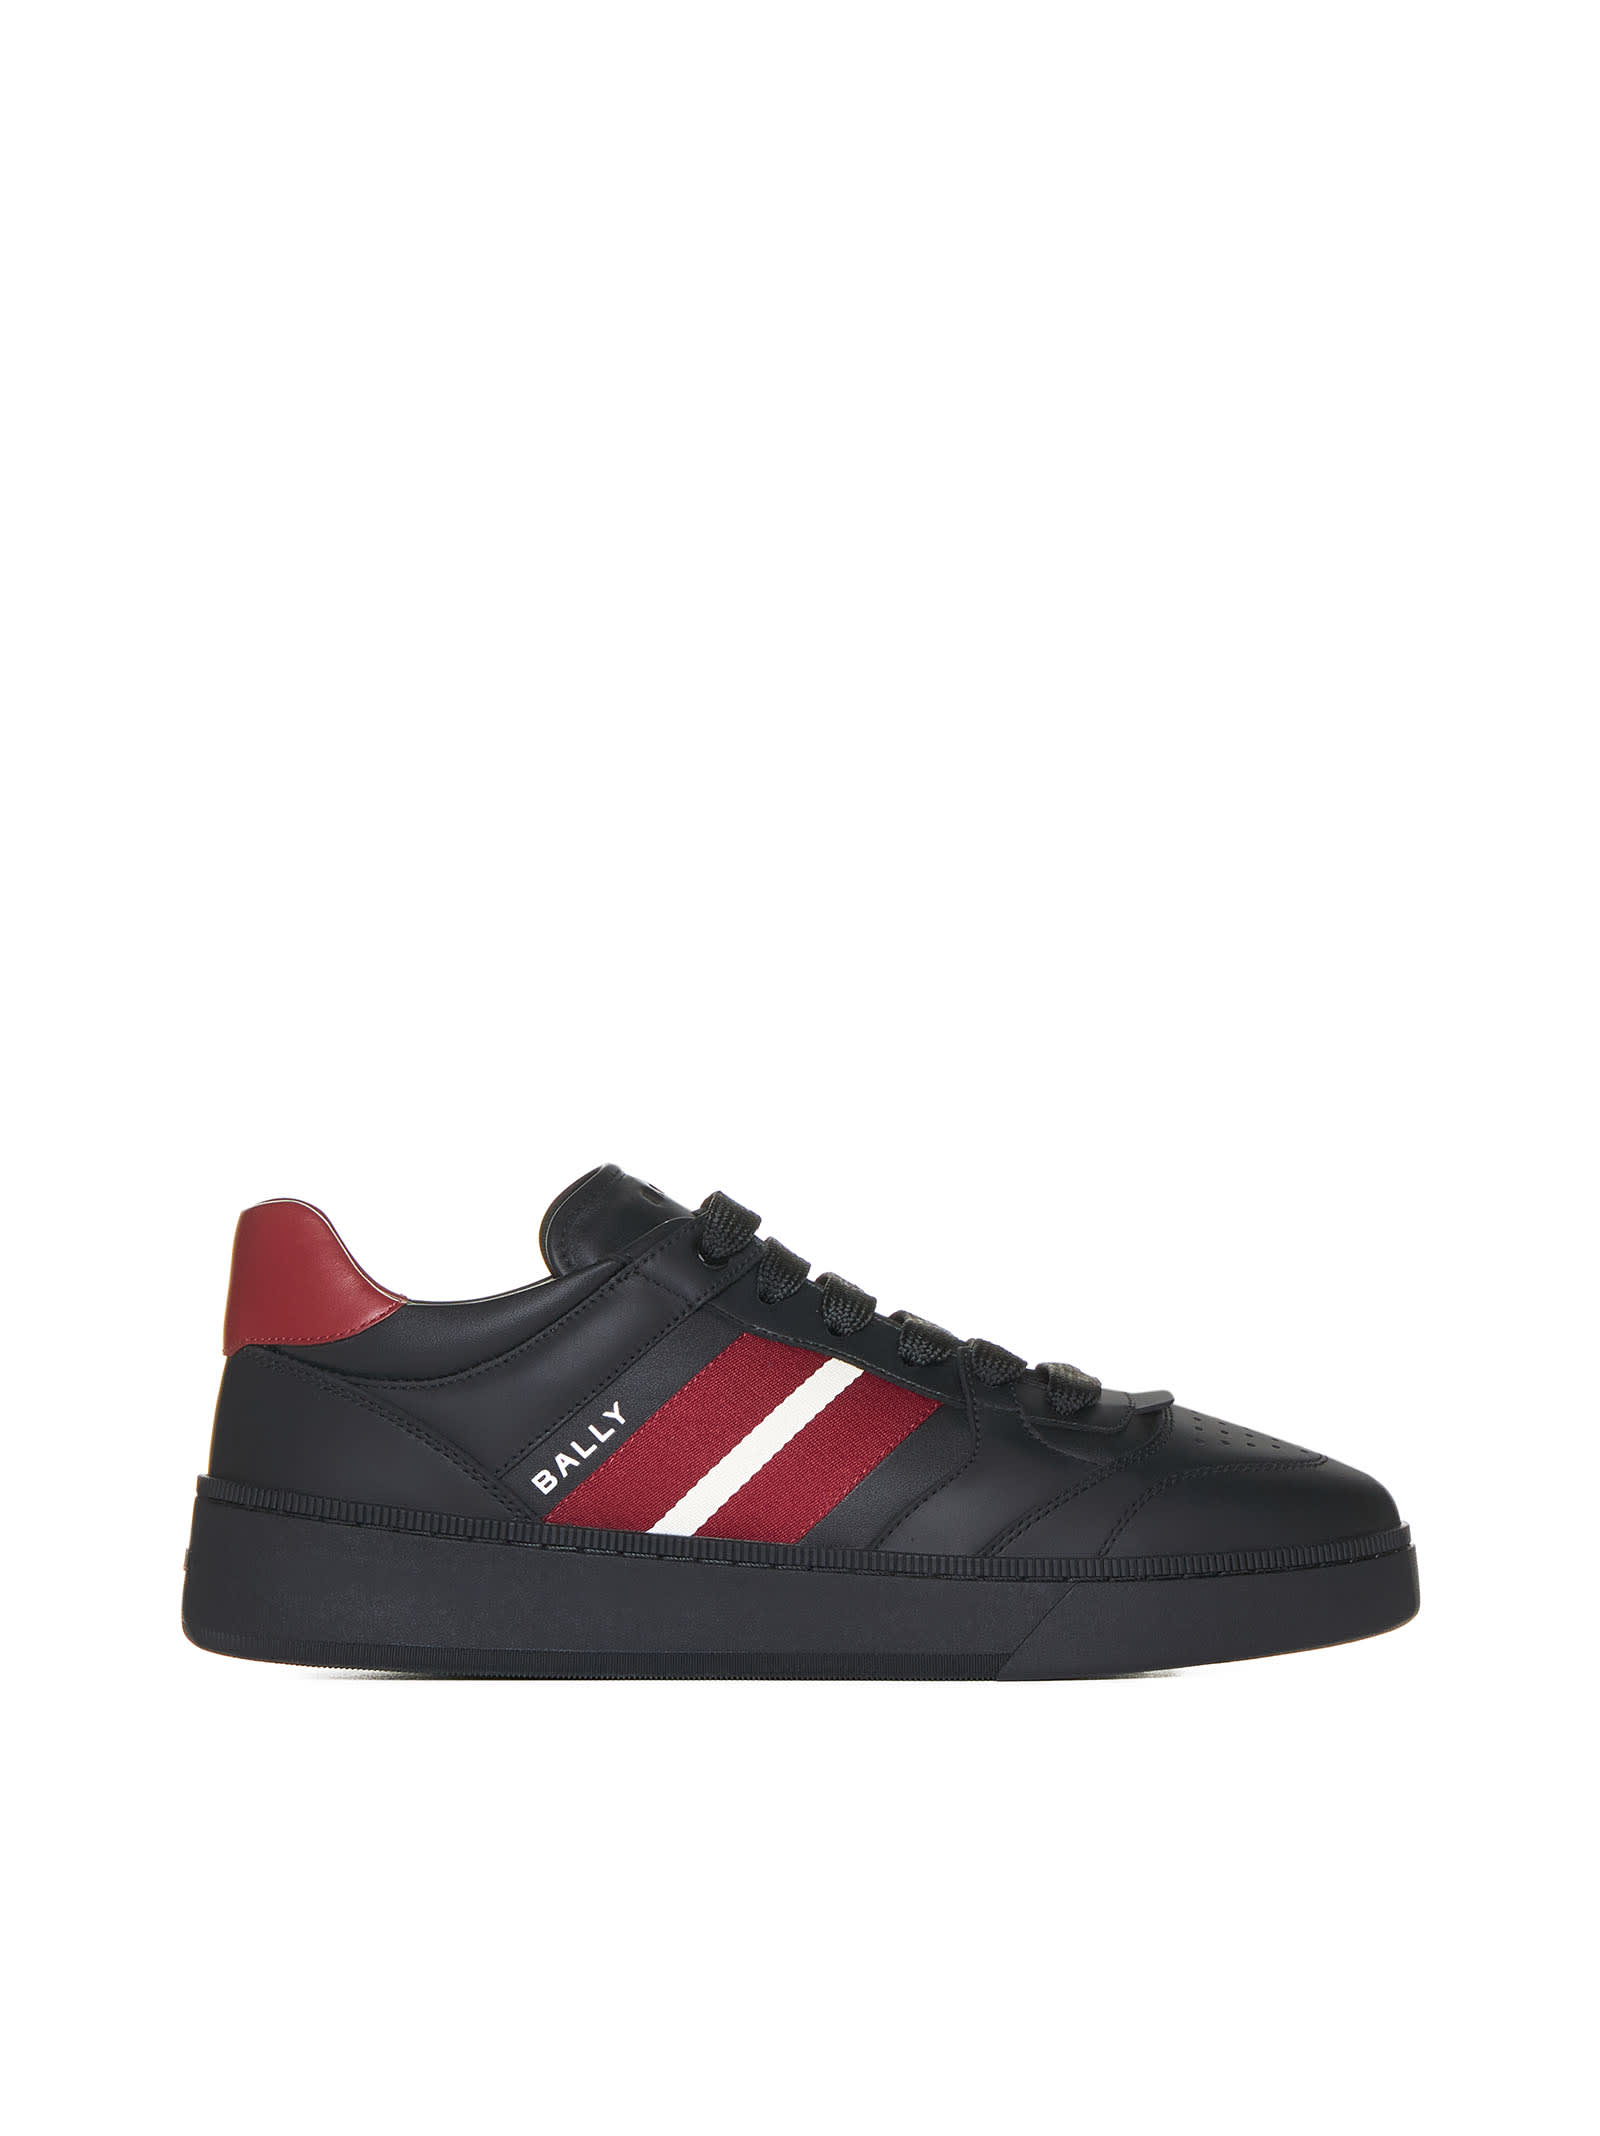 Bally Sneakers In Black/black/red